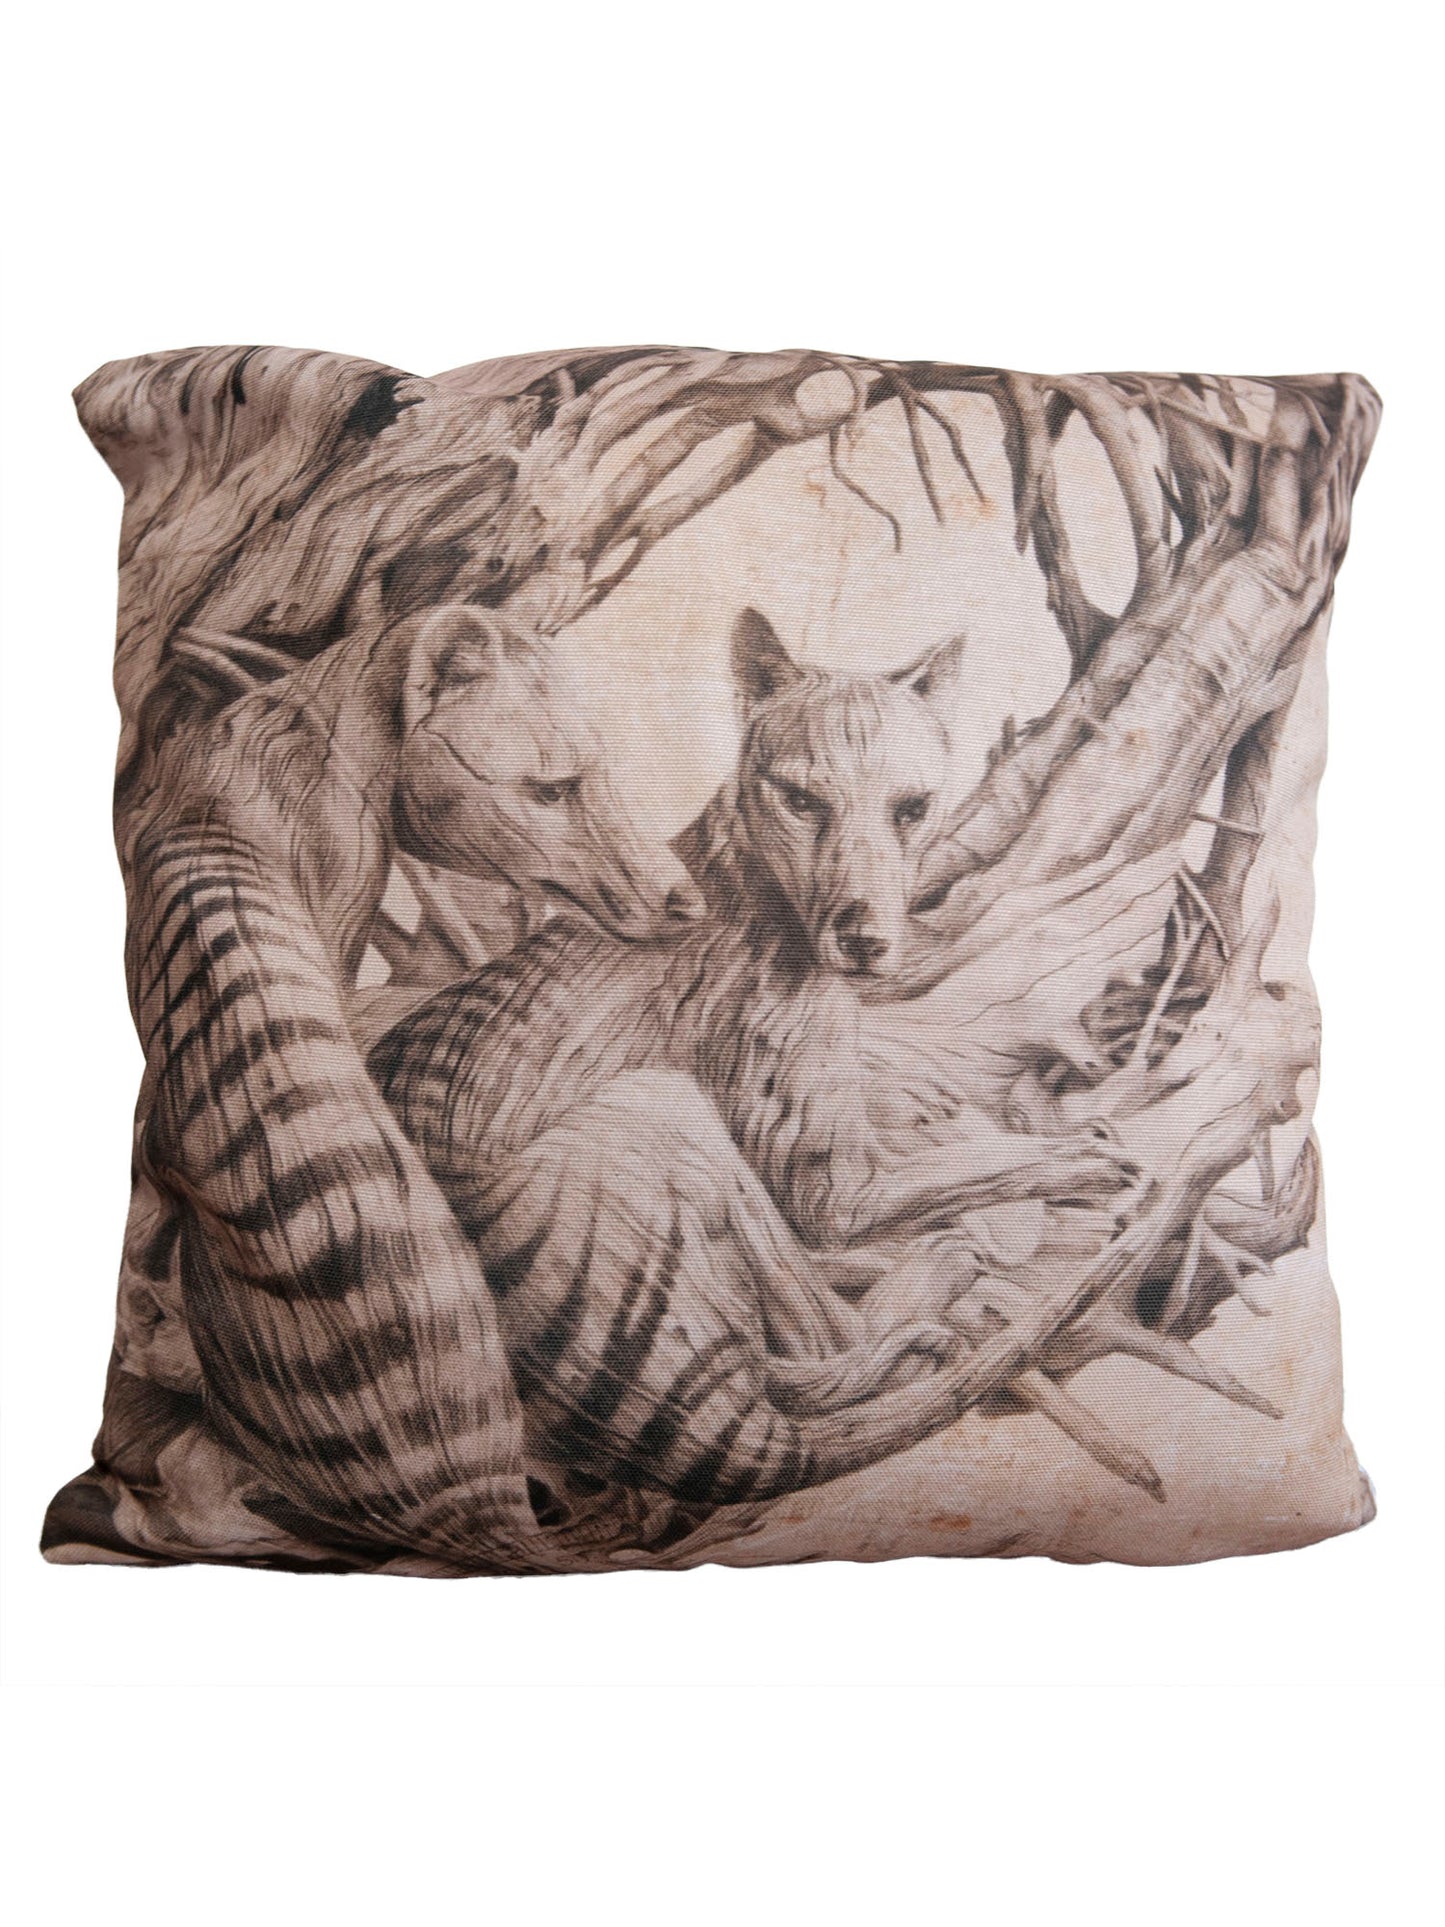 Cushion cover featuring 'Driftwood Thylacine' artwork